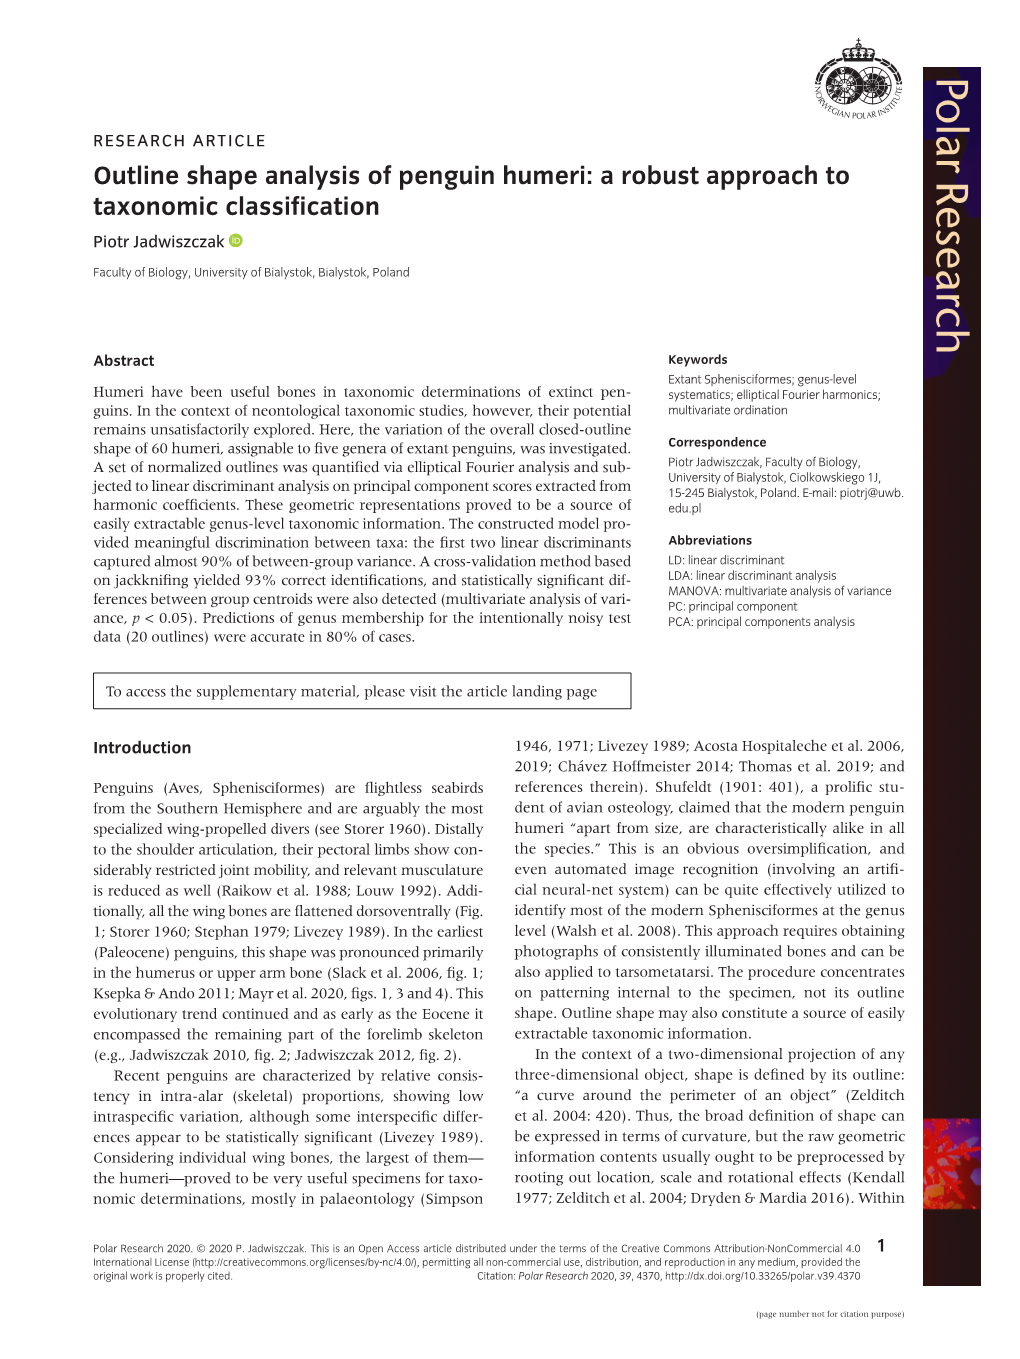 Outline Shape Analysis of Penguin Humeri: a Robust Approach to Taxonomic Classification Piotr Jadwiszczak